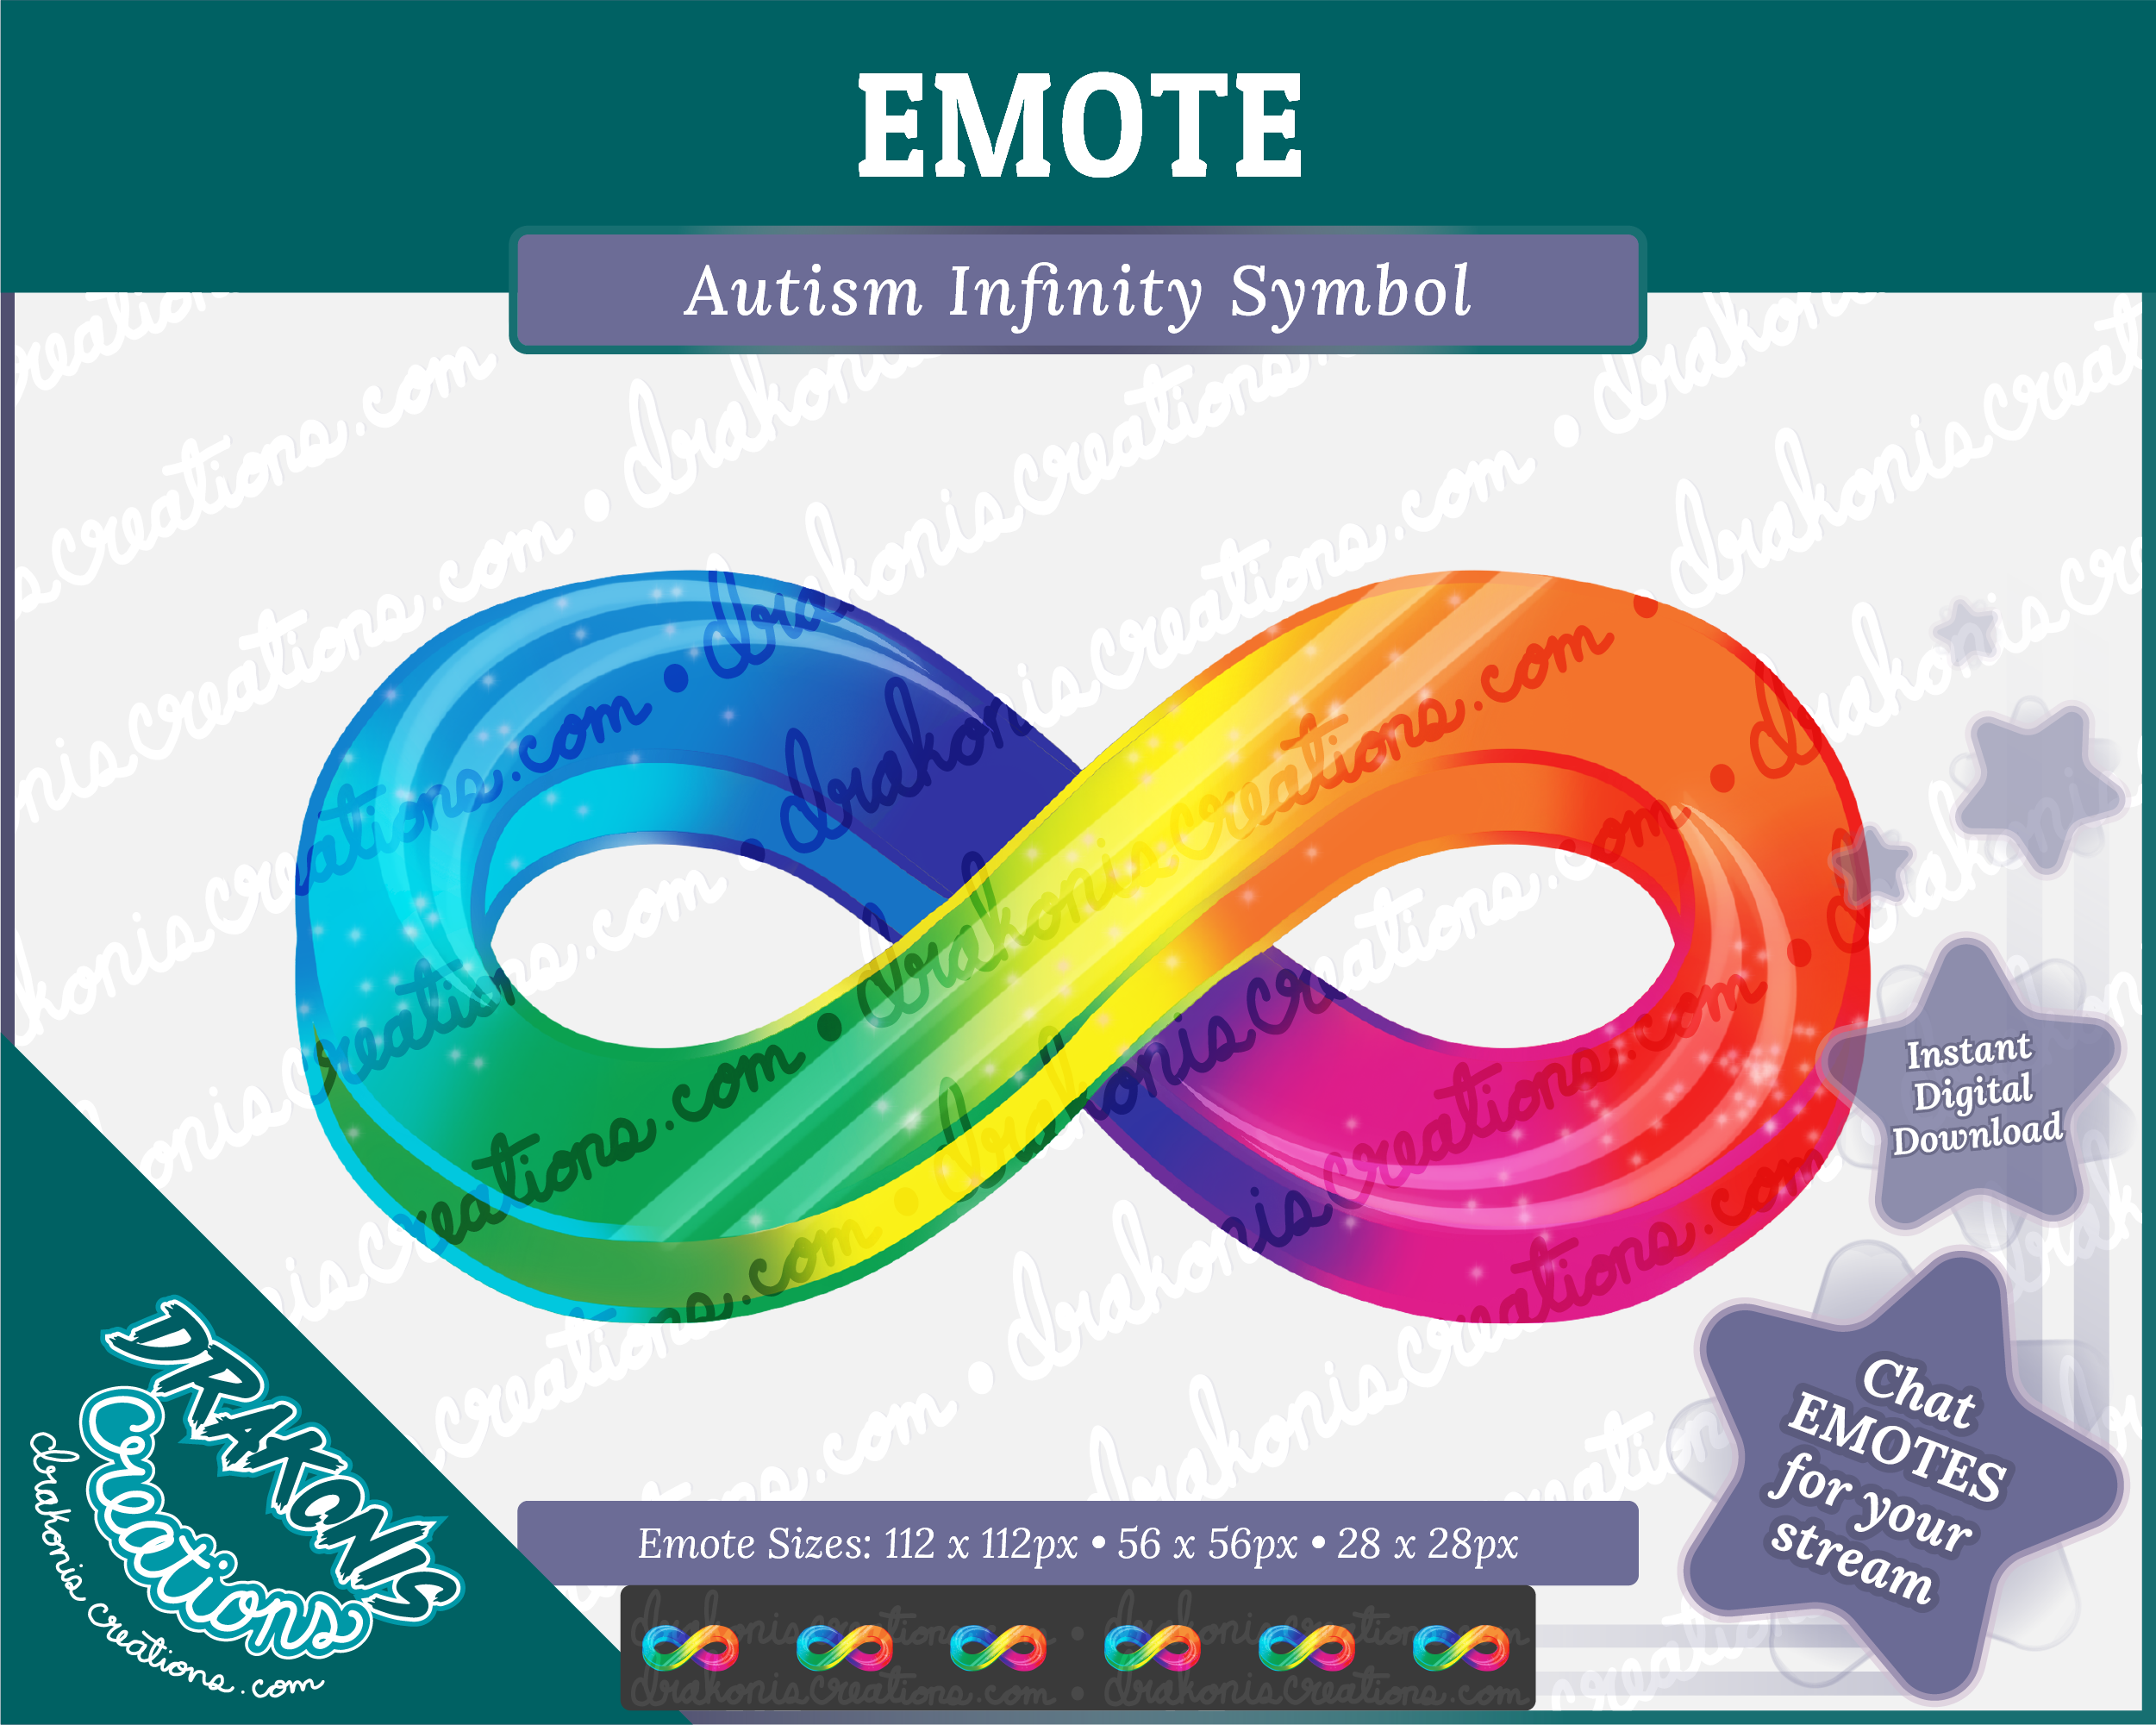 AutismInfinitySymbolEmotes-ByDrakonisCreations-Cover